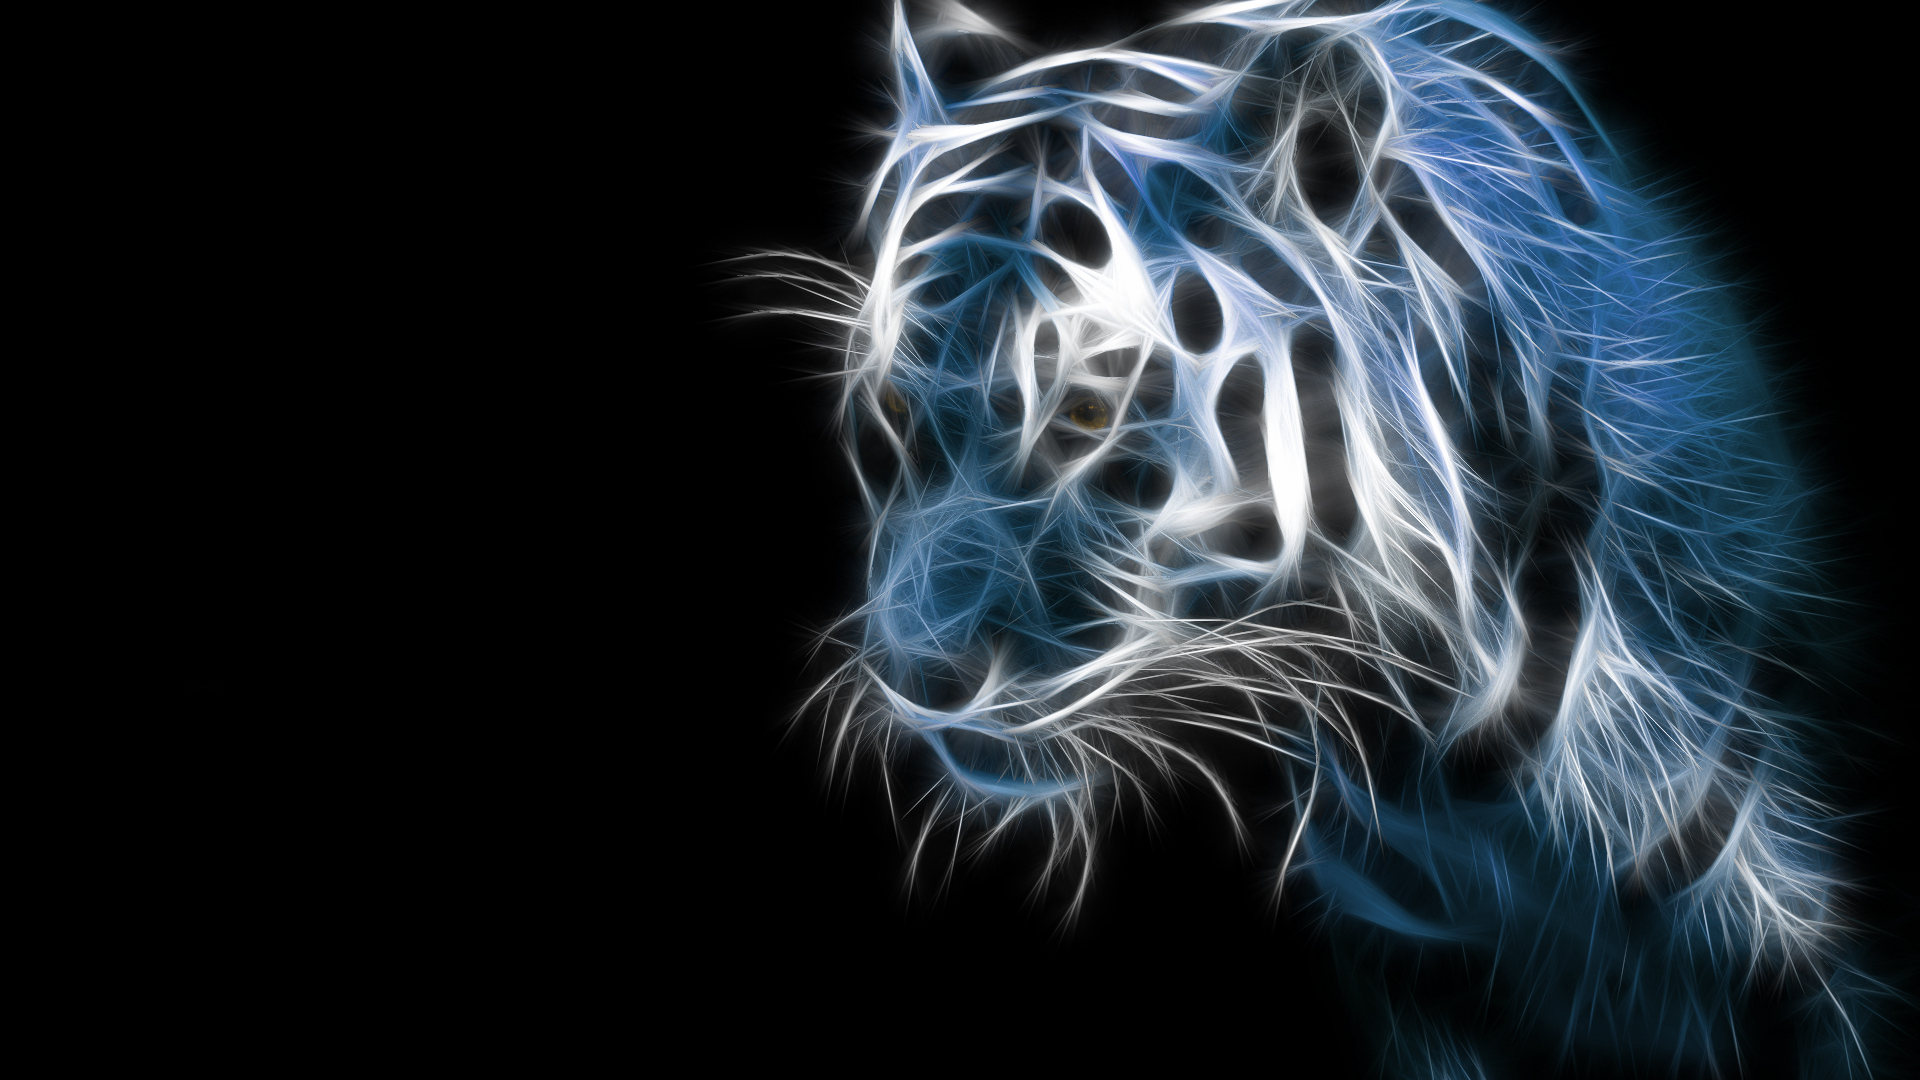 Download Tiger Animal Wallpaper 1920x1080 Full HD Wallpapers